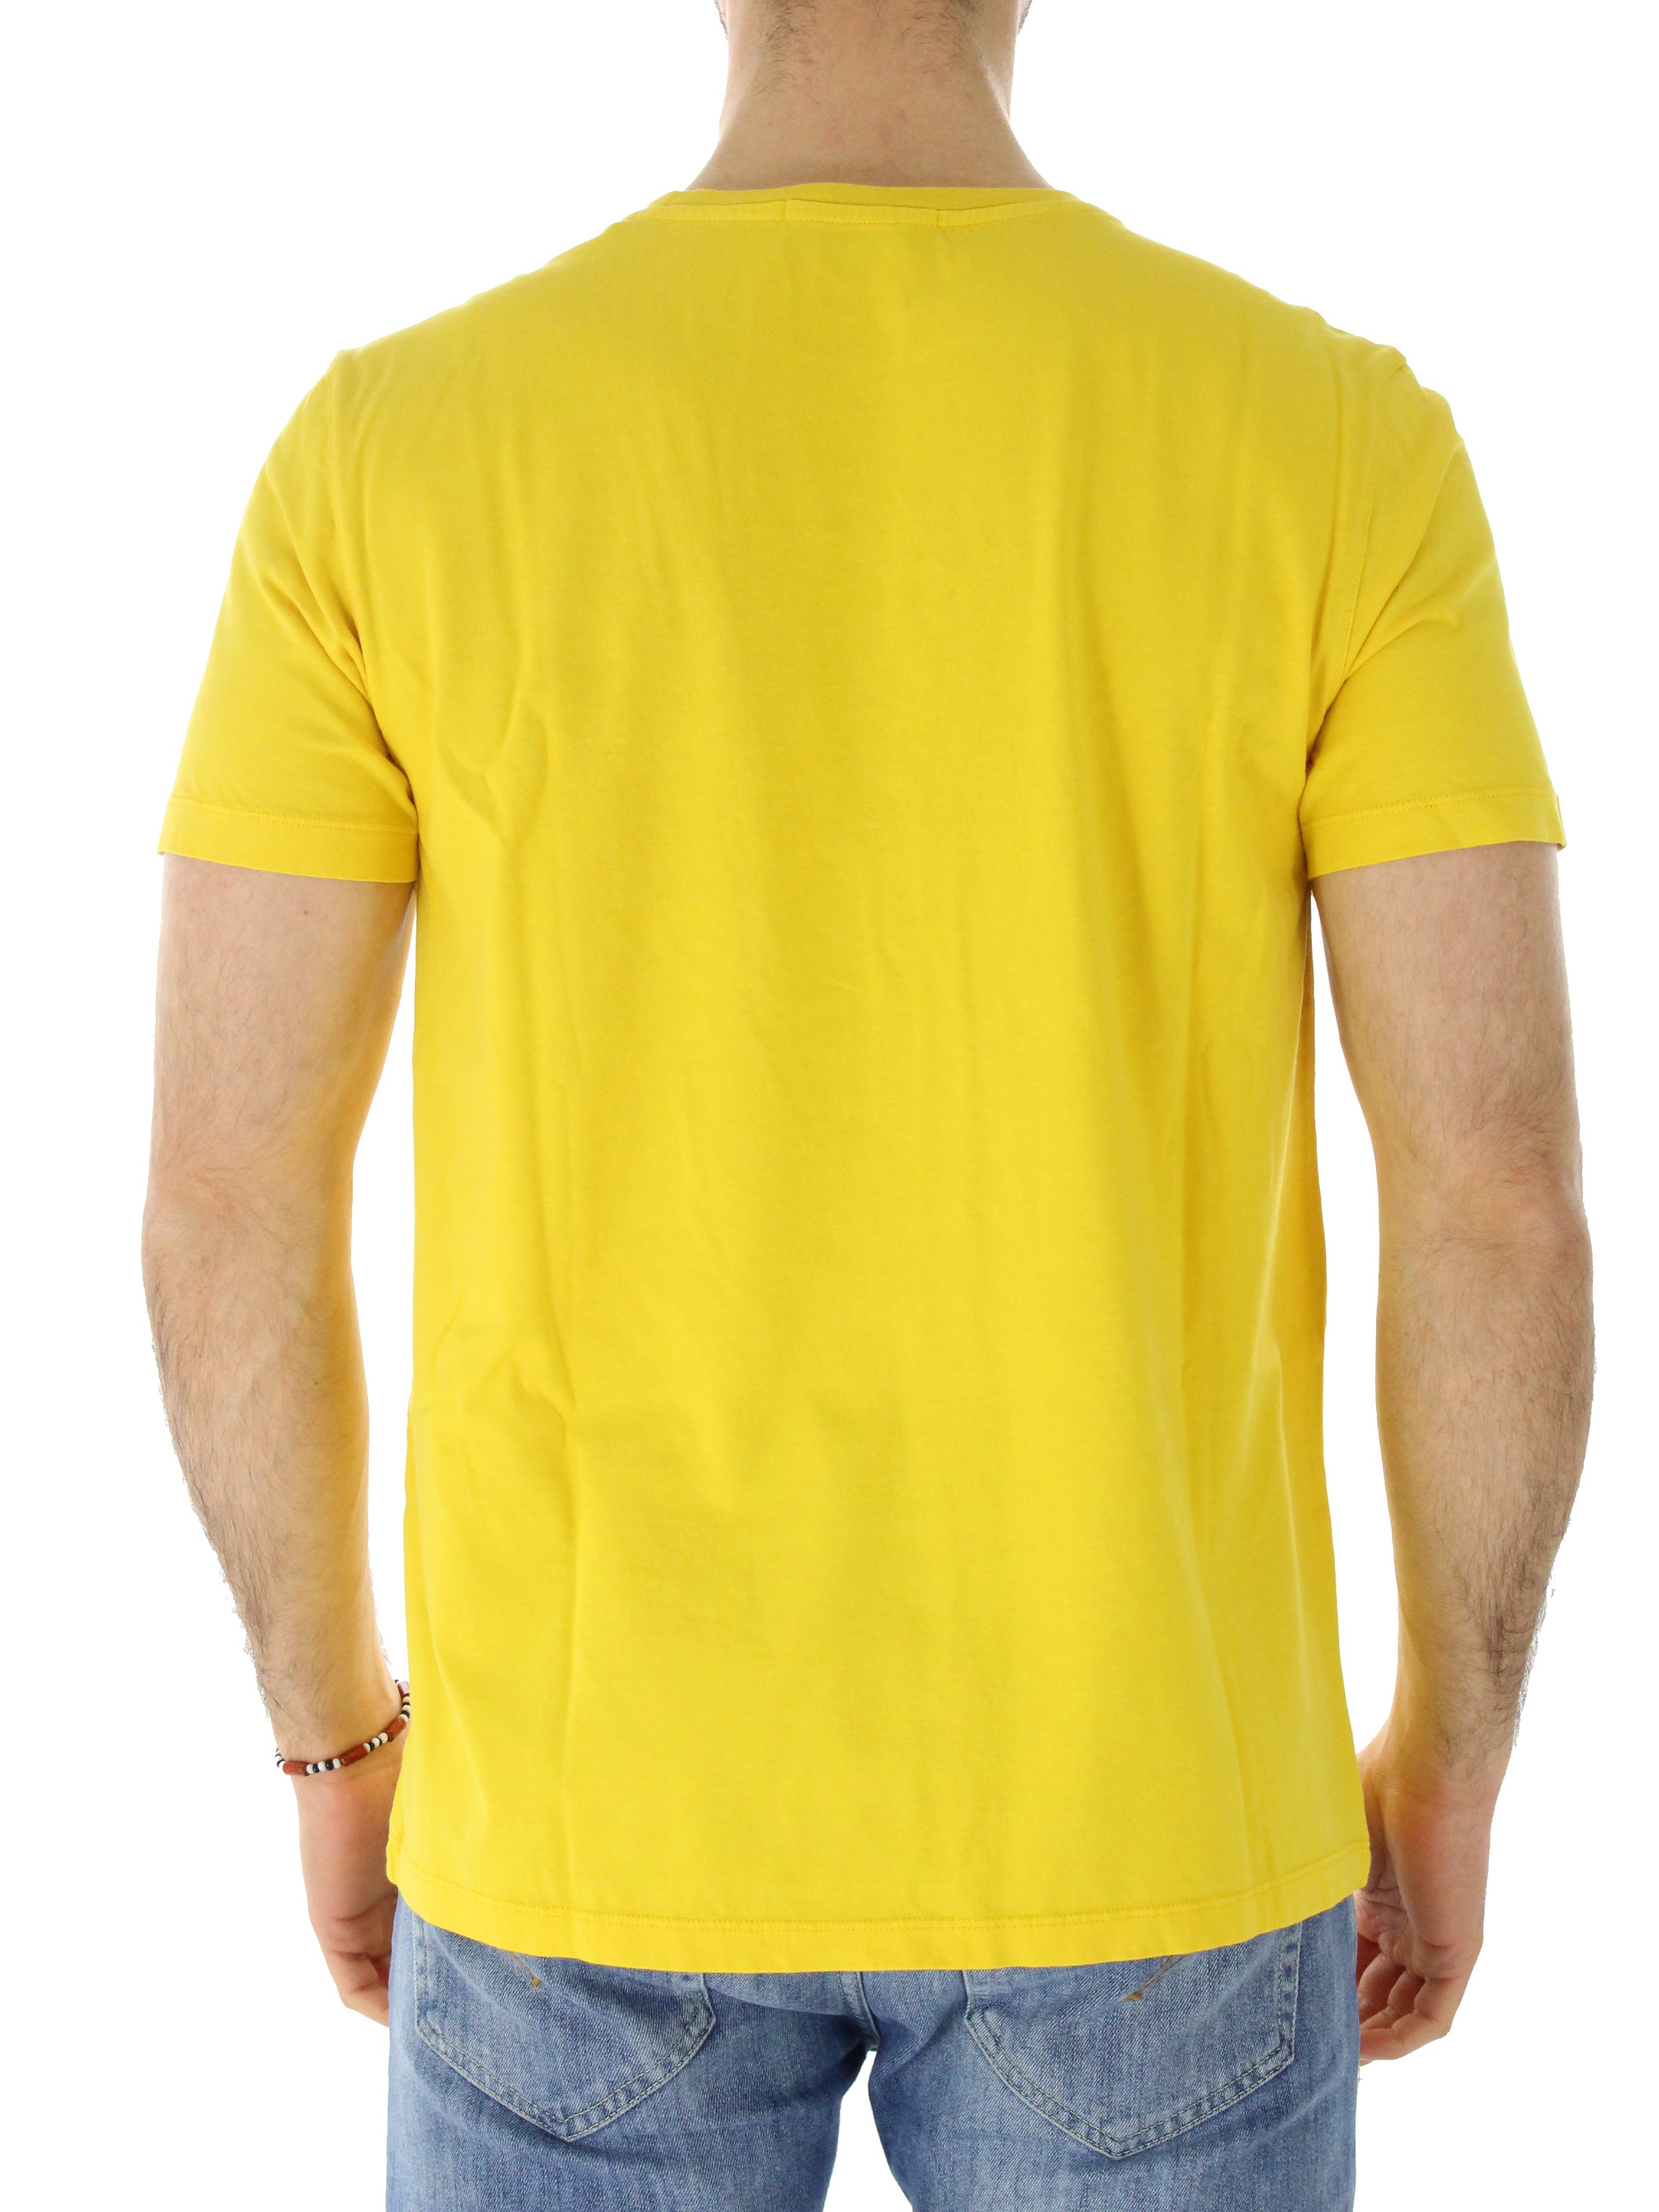 MH-MH-963 yellow t-shirt